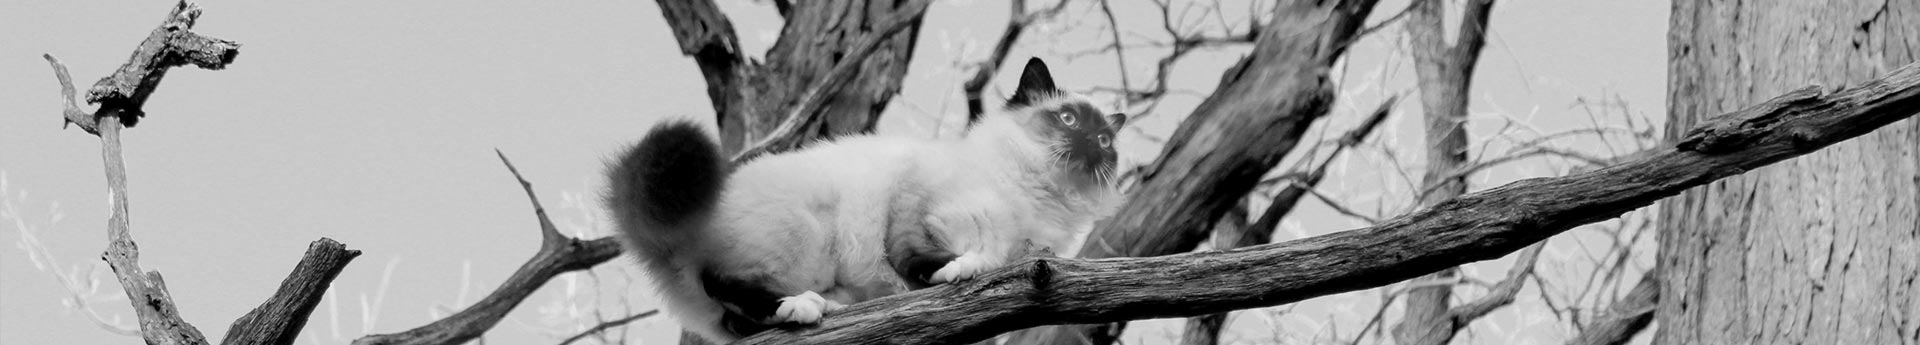 Siamese cat in a tree - Adventurous Finch from Grayslake, Illinois